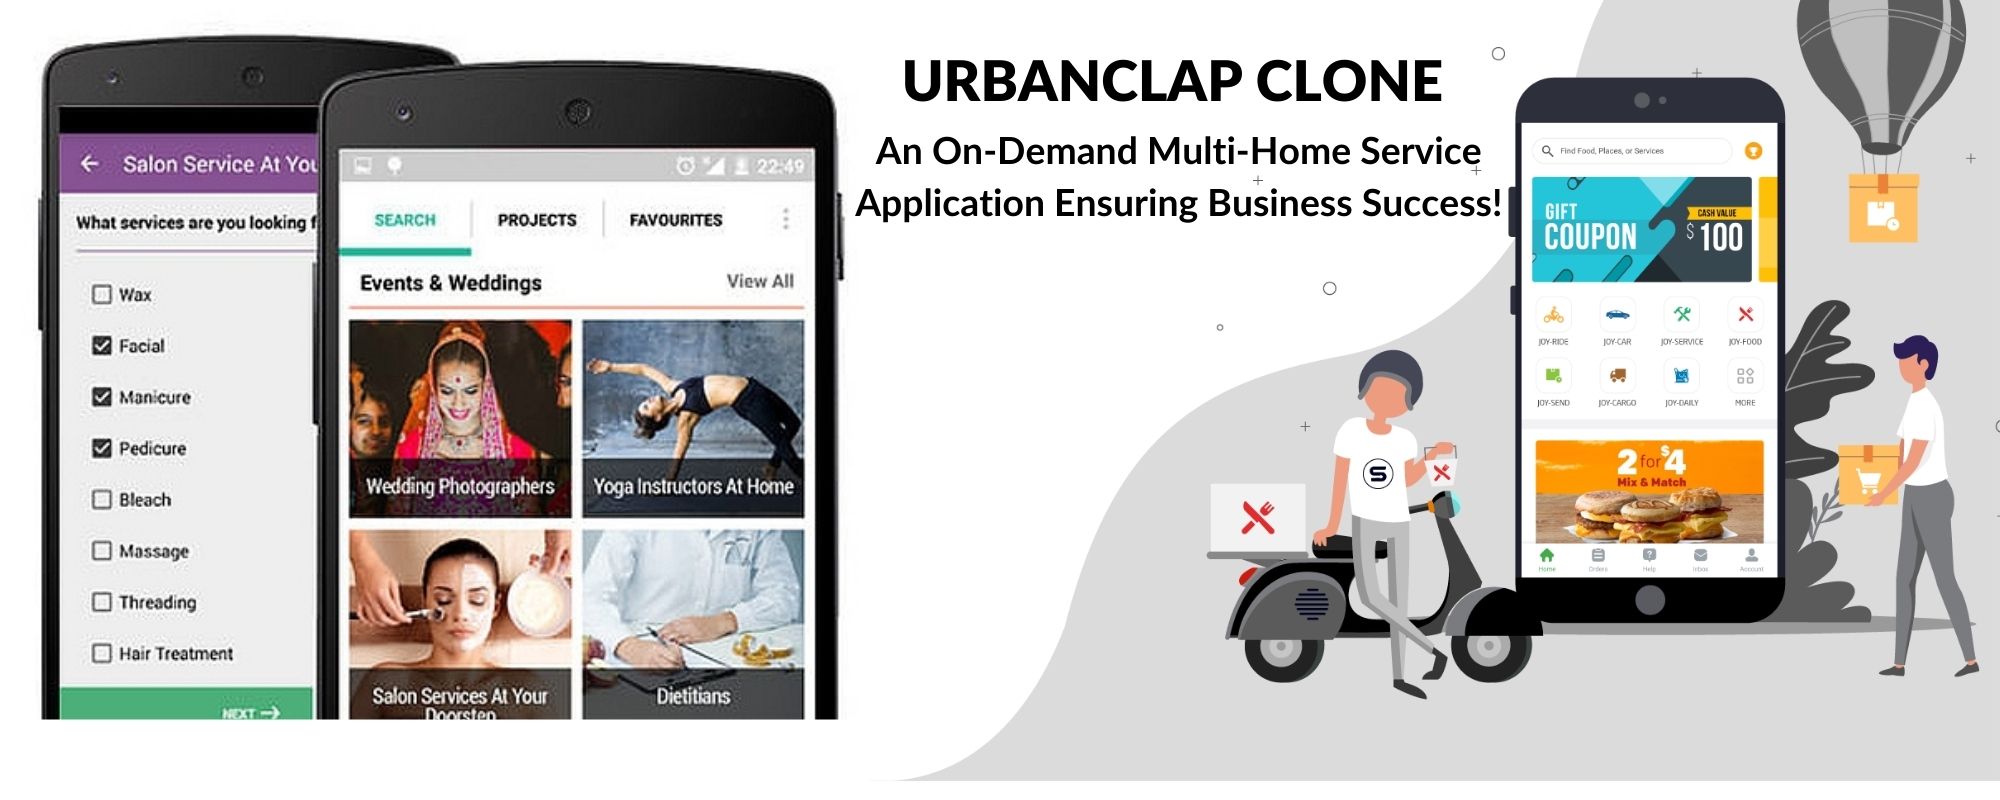 Urbanclap Clone